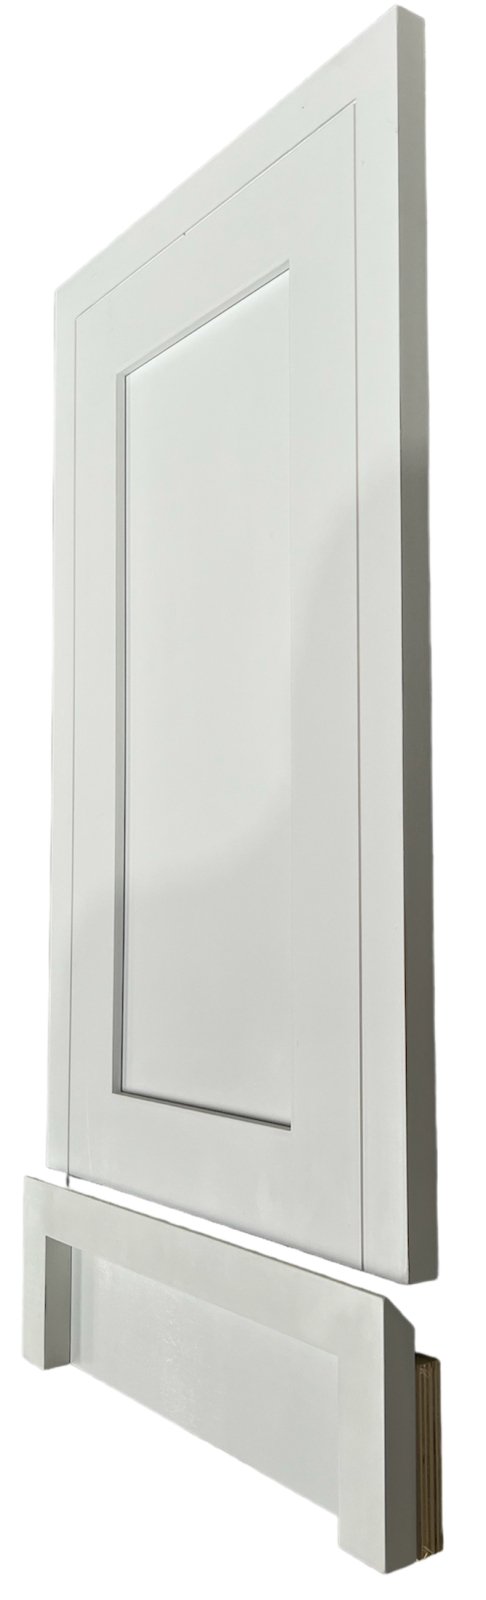 APD 450 - 450mm Slimline Appliance Door - Classic Kitchens Direct